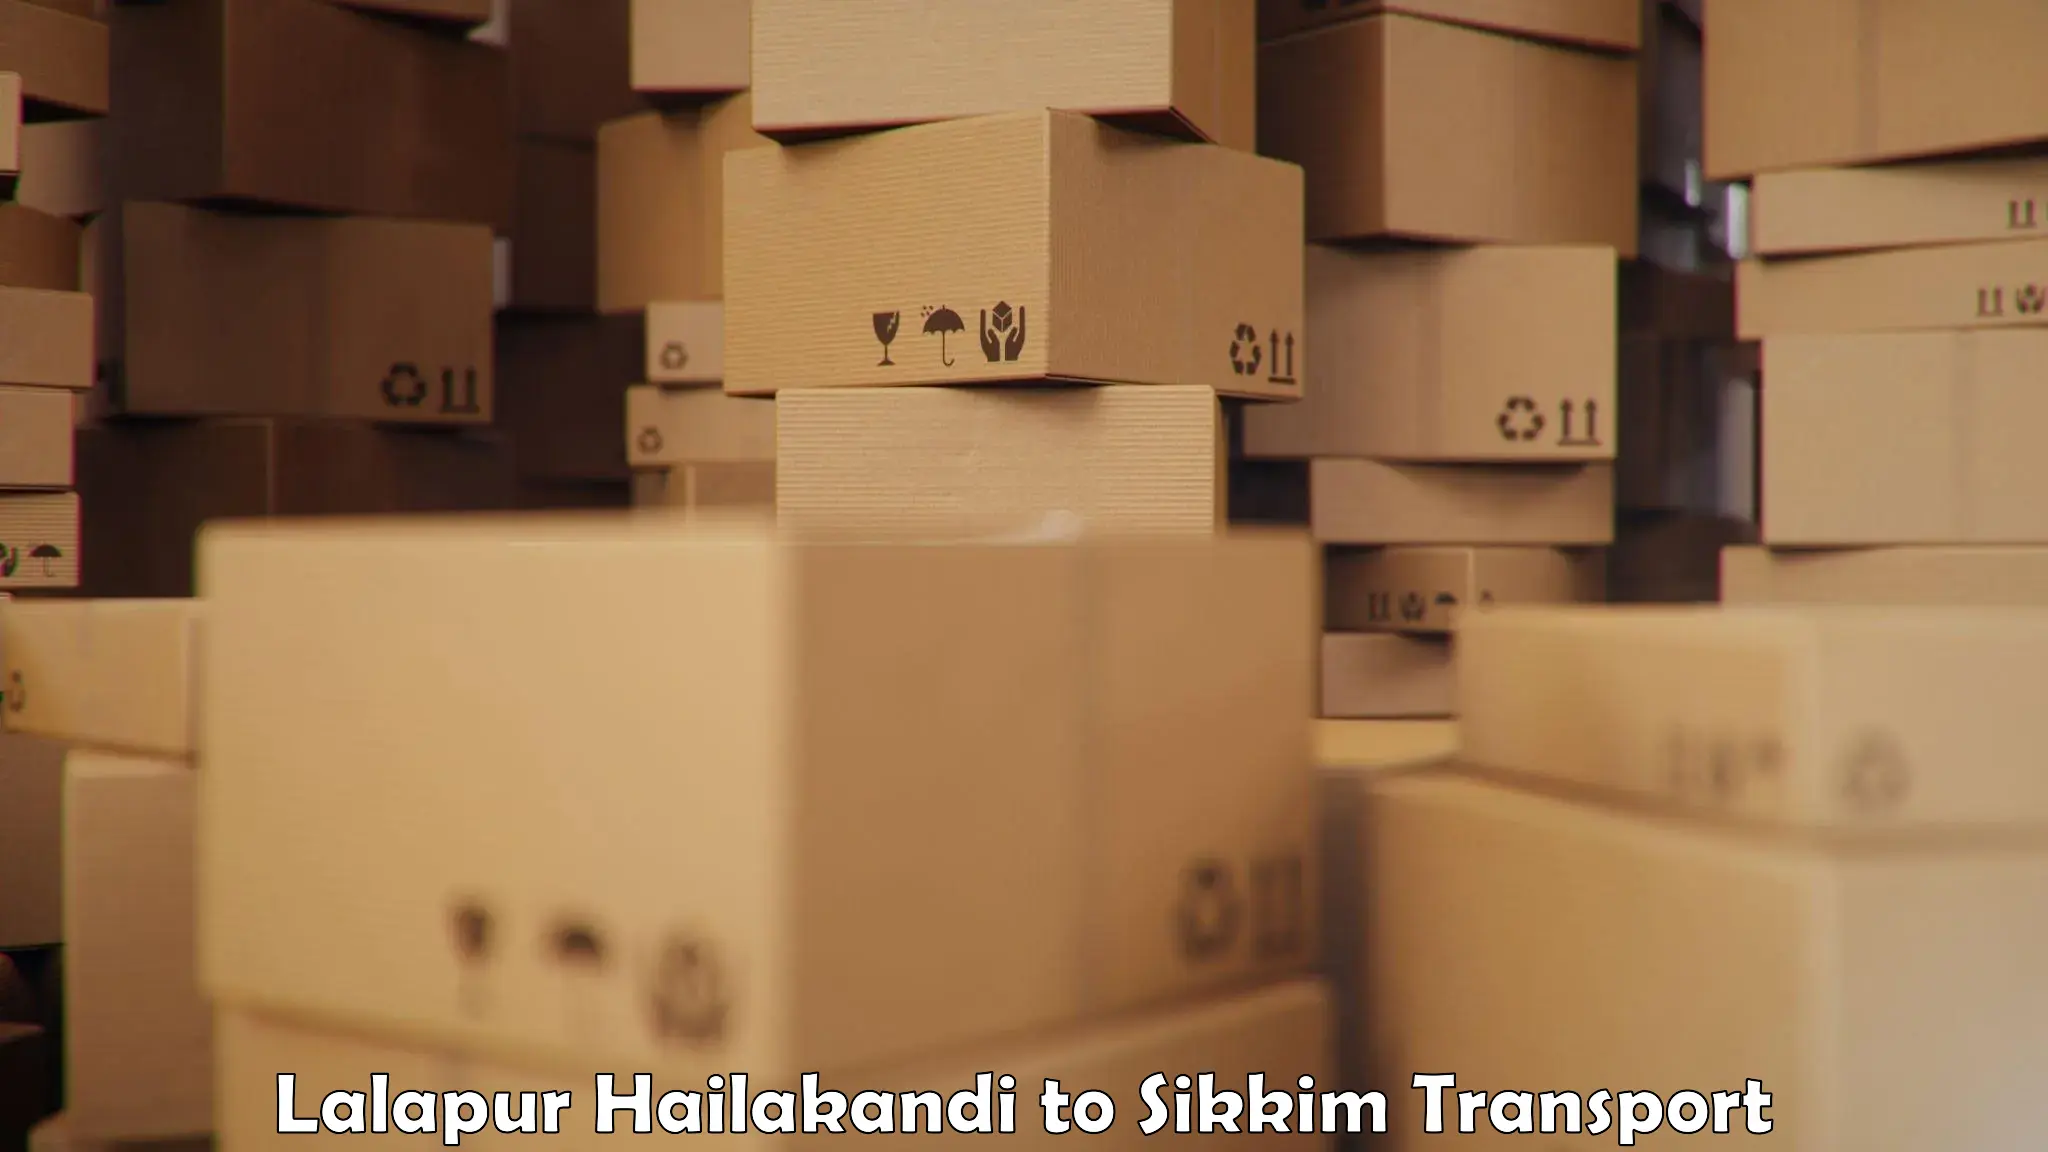 Furniture transport service Lalapur Hailakandi to Gangtok